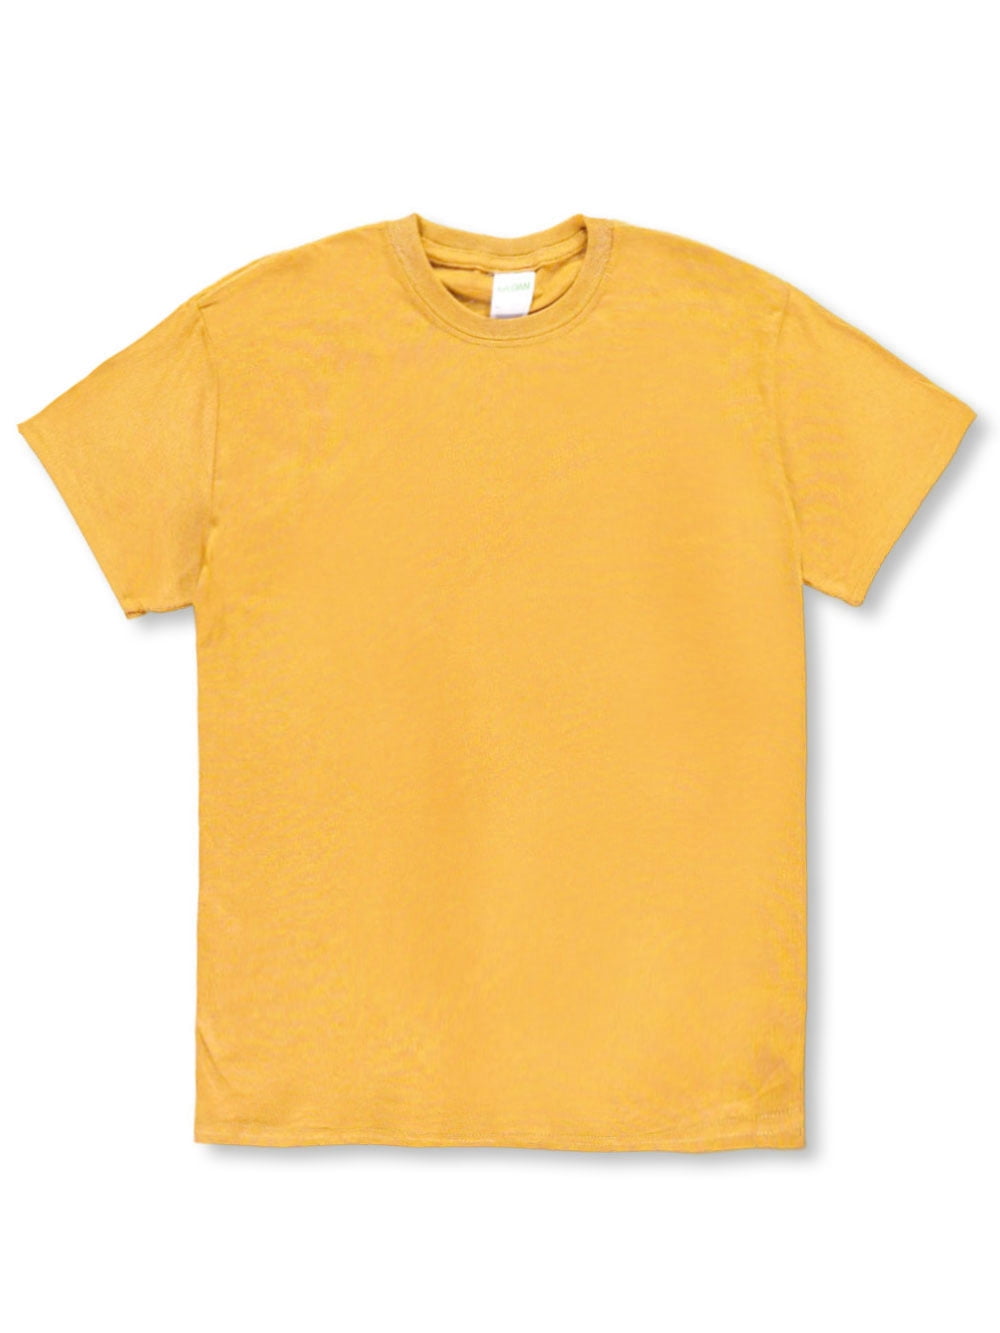 T-Shirt (Adult Sizes S - 4XL)